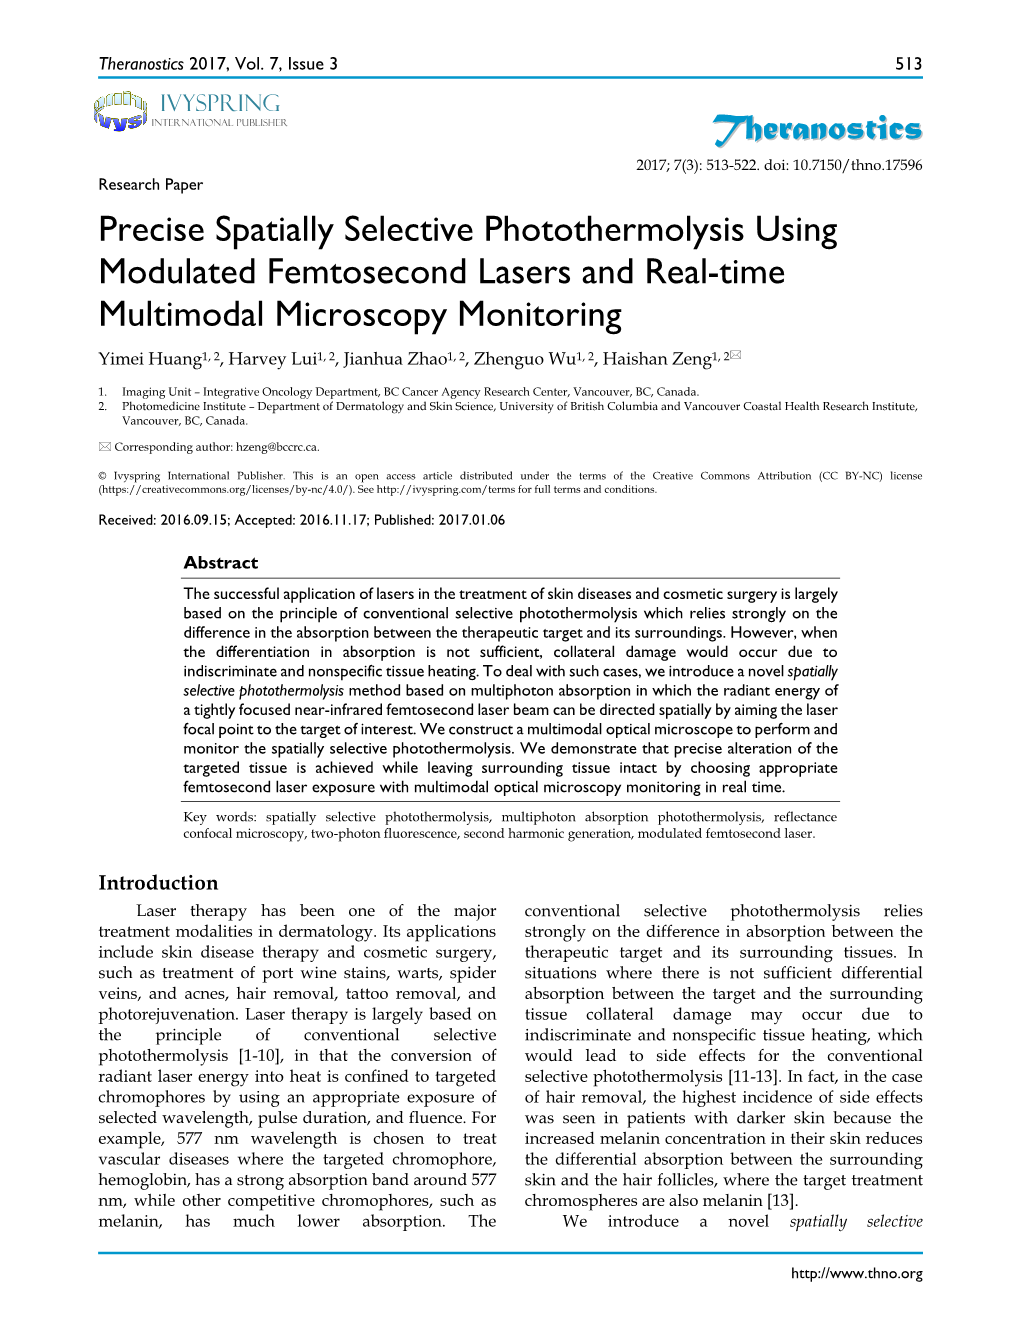 Precise Spatially Selective Photothermolysis Using Modulated